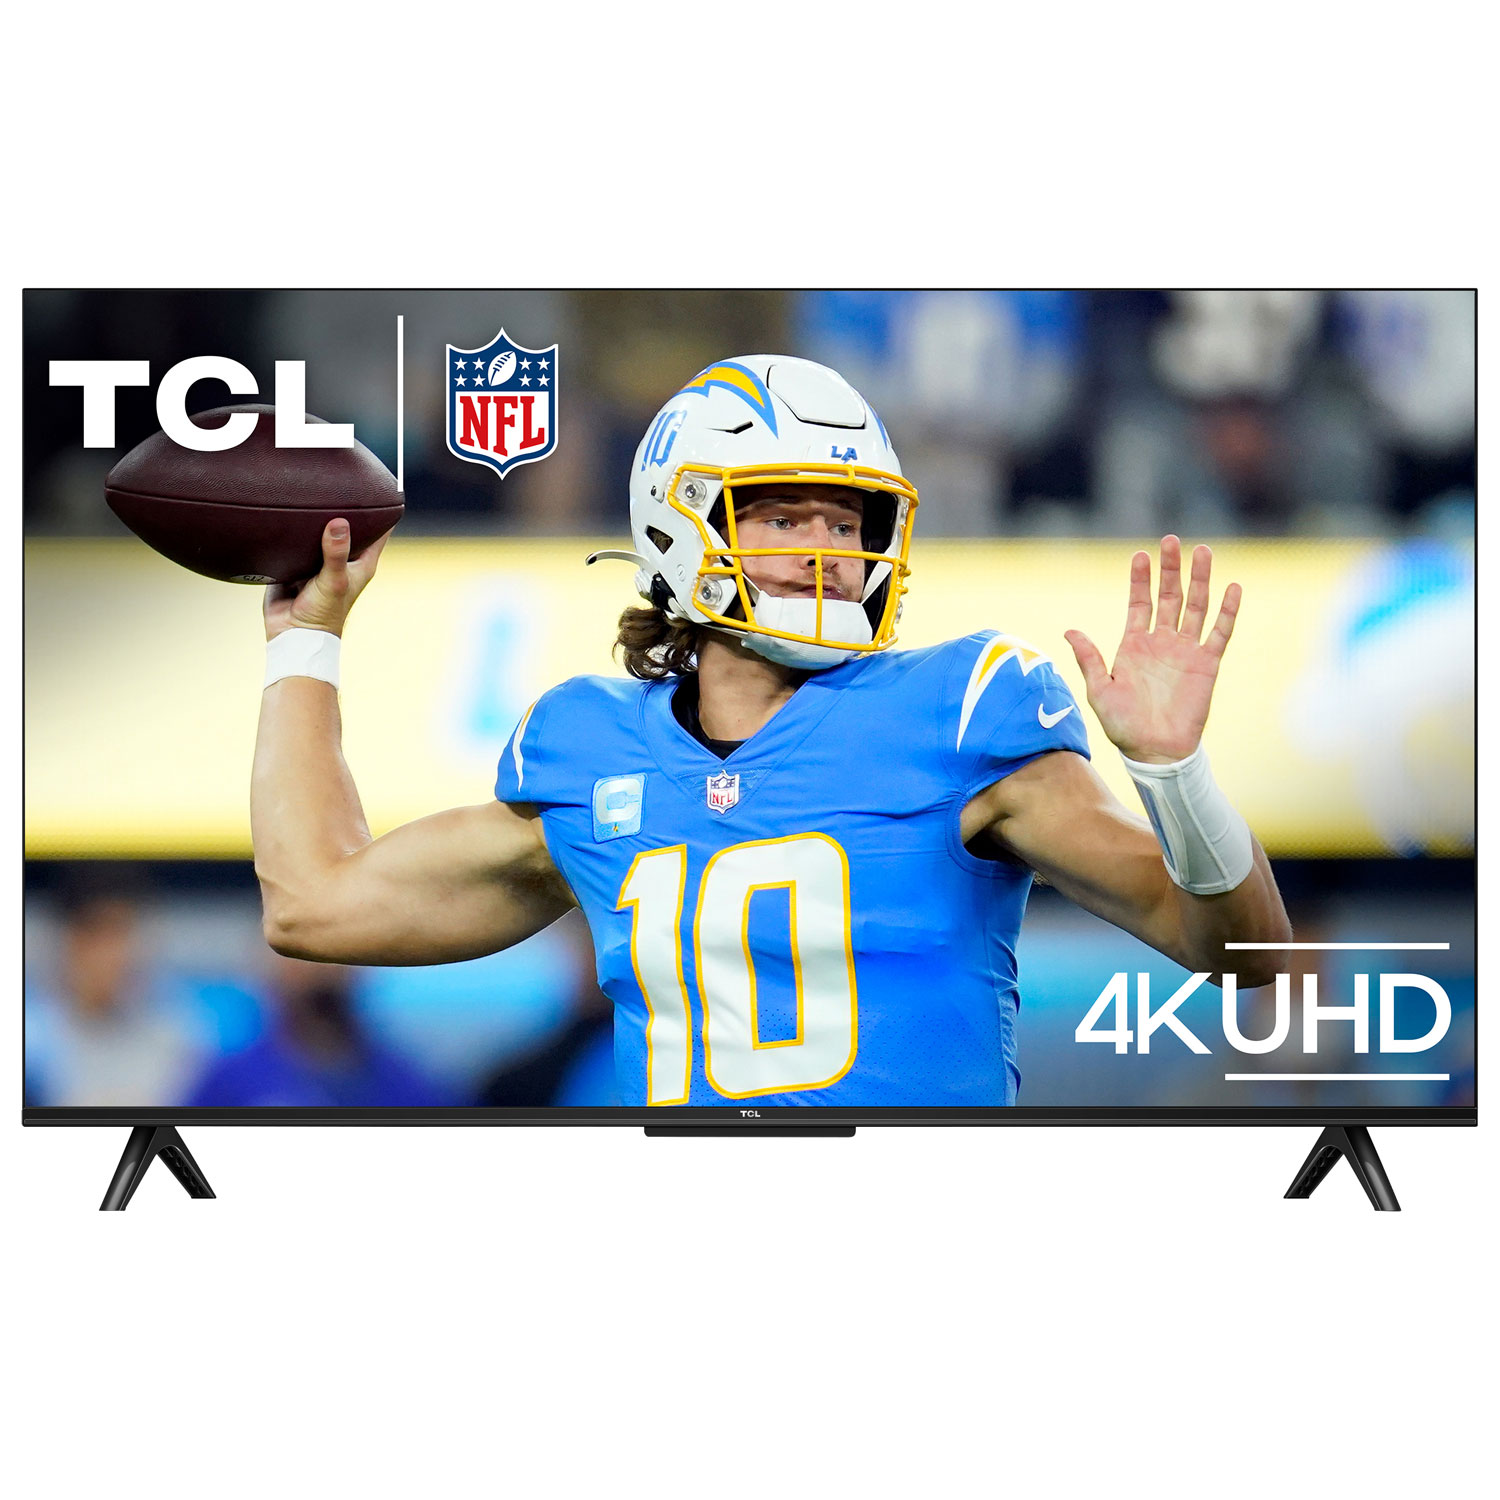 TCL 43" S-Class 4K UHD HDR LED Smart Google TV (43S450G-CA) - 2023